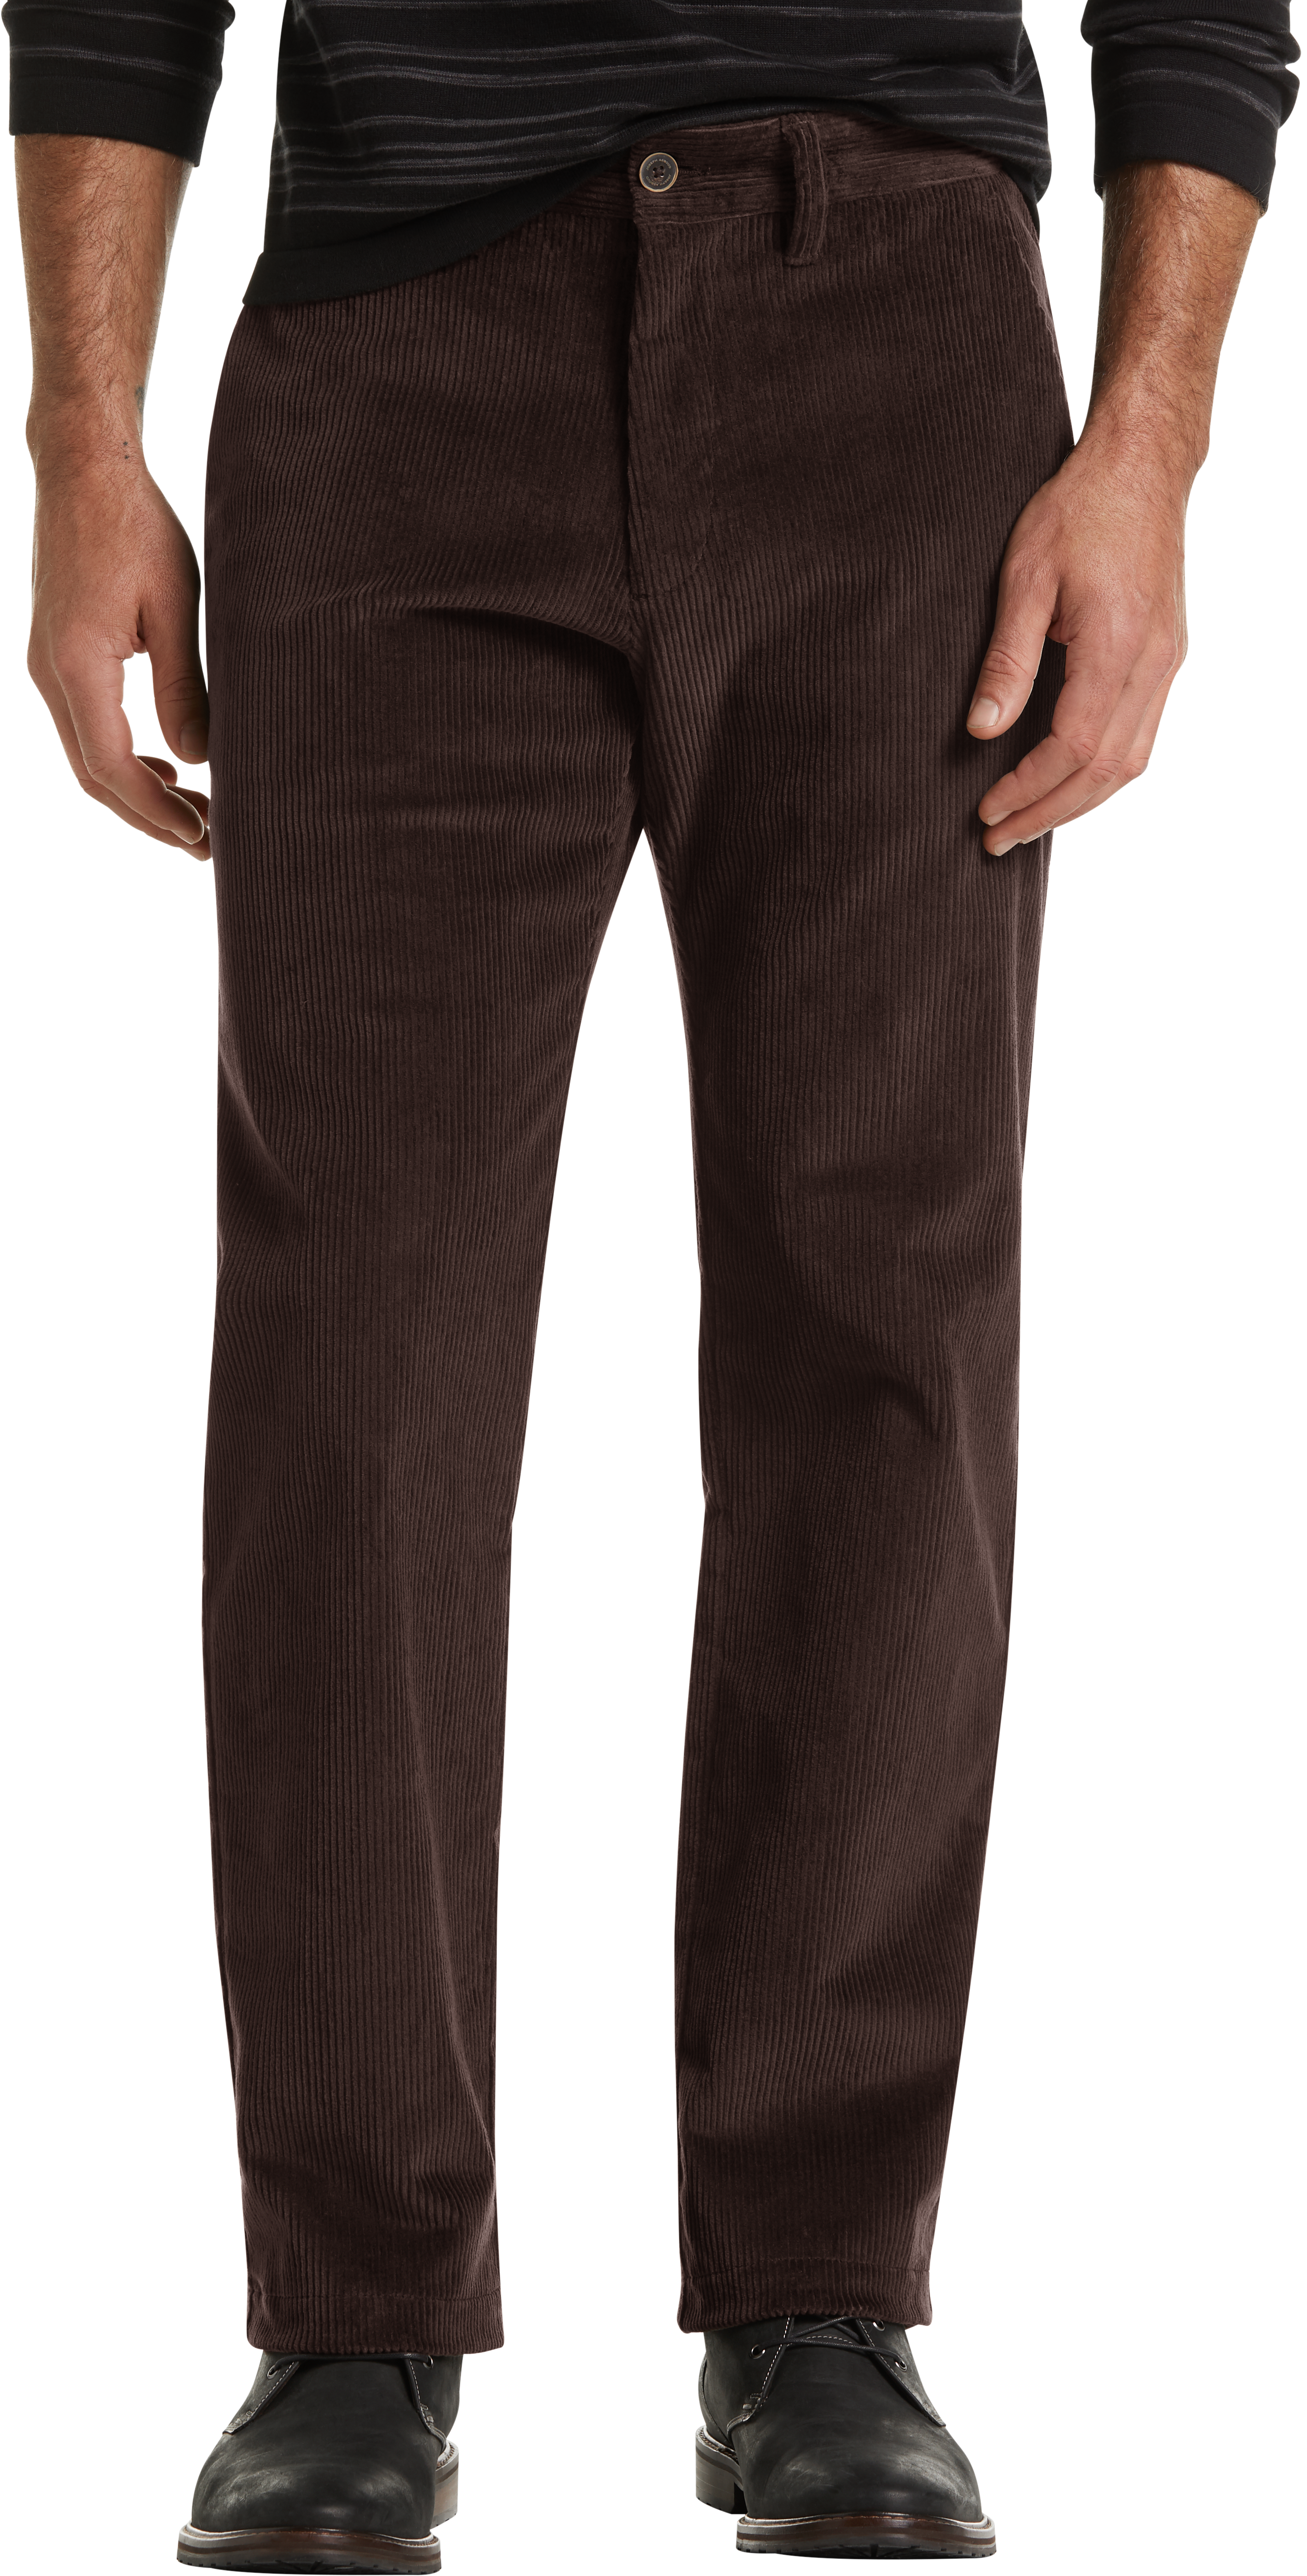 Joseph Abboud Dark Brown Corduroy Modern Fit Casual Pants - Men's Sale ...